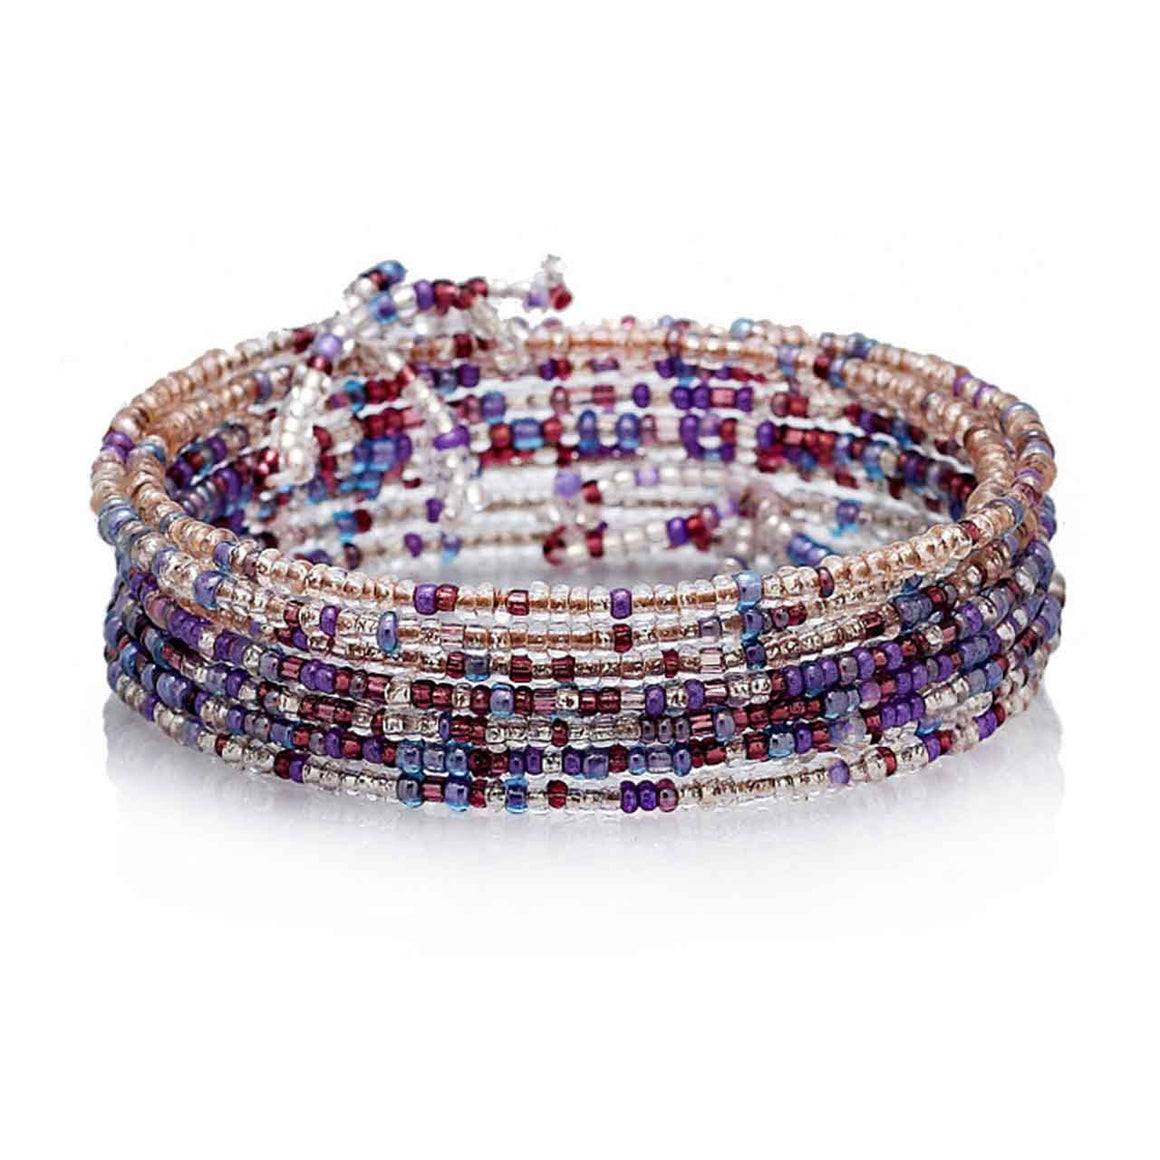 10 Row Glass Bead Bracelet - Purple Turquoise Coloured